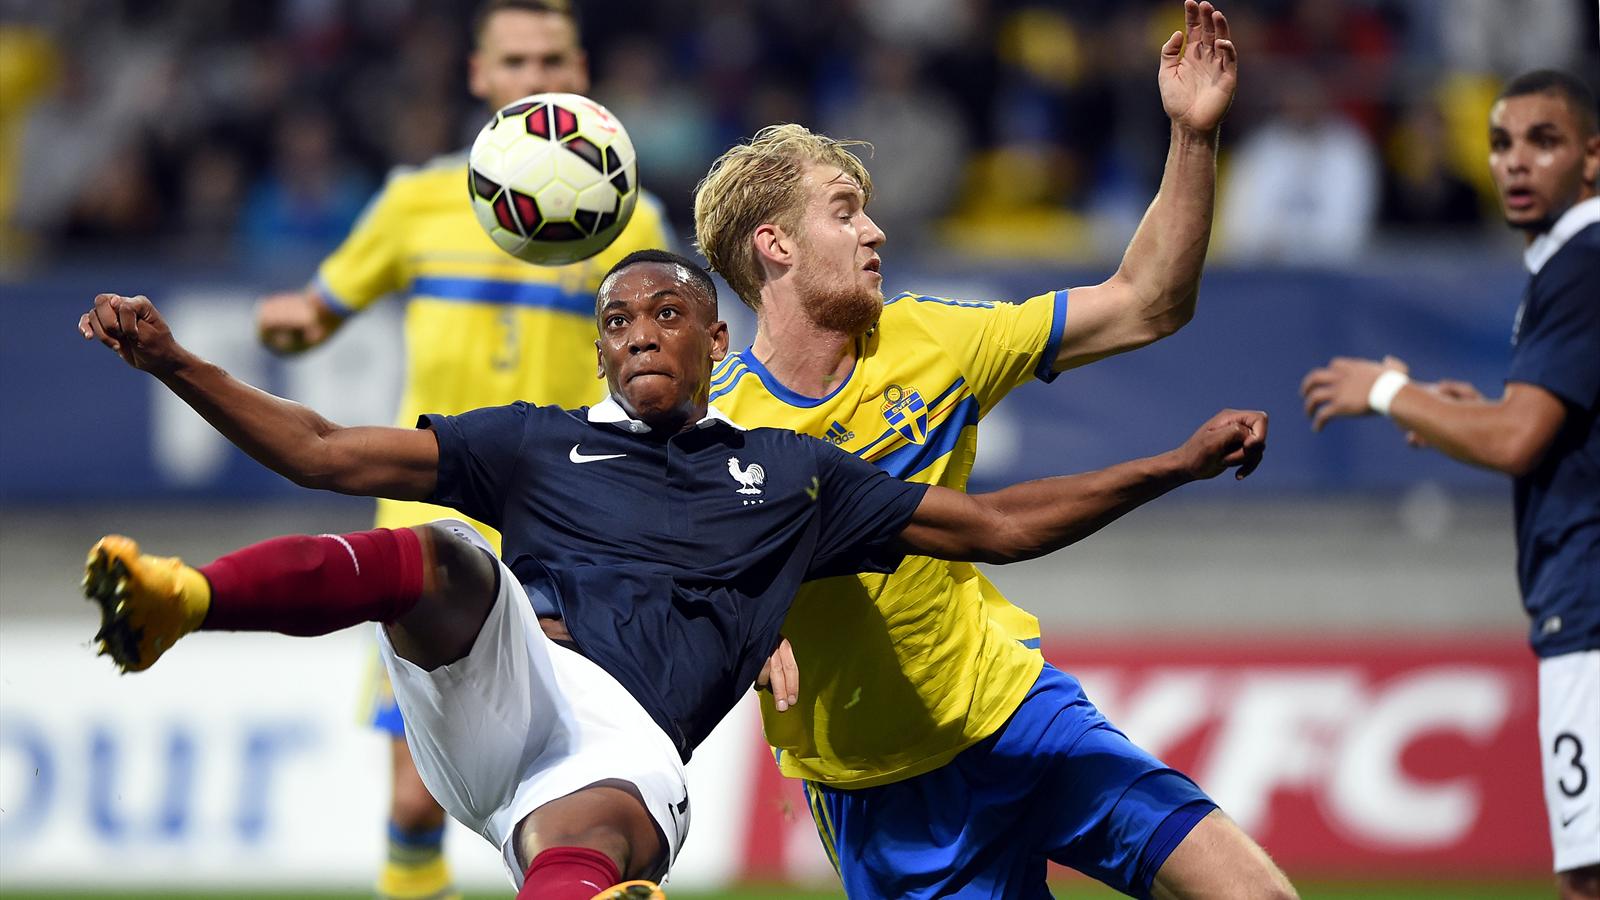 Match Espoirs Suède vs France en direct live streaming